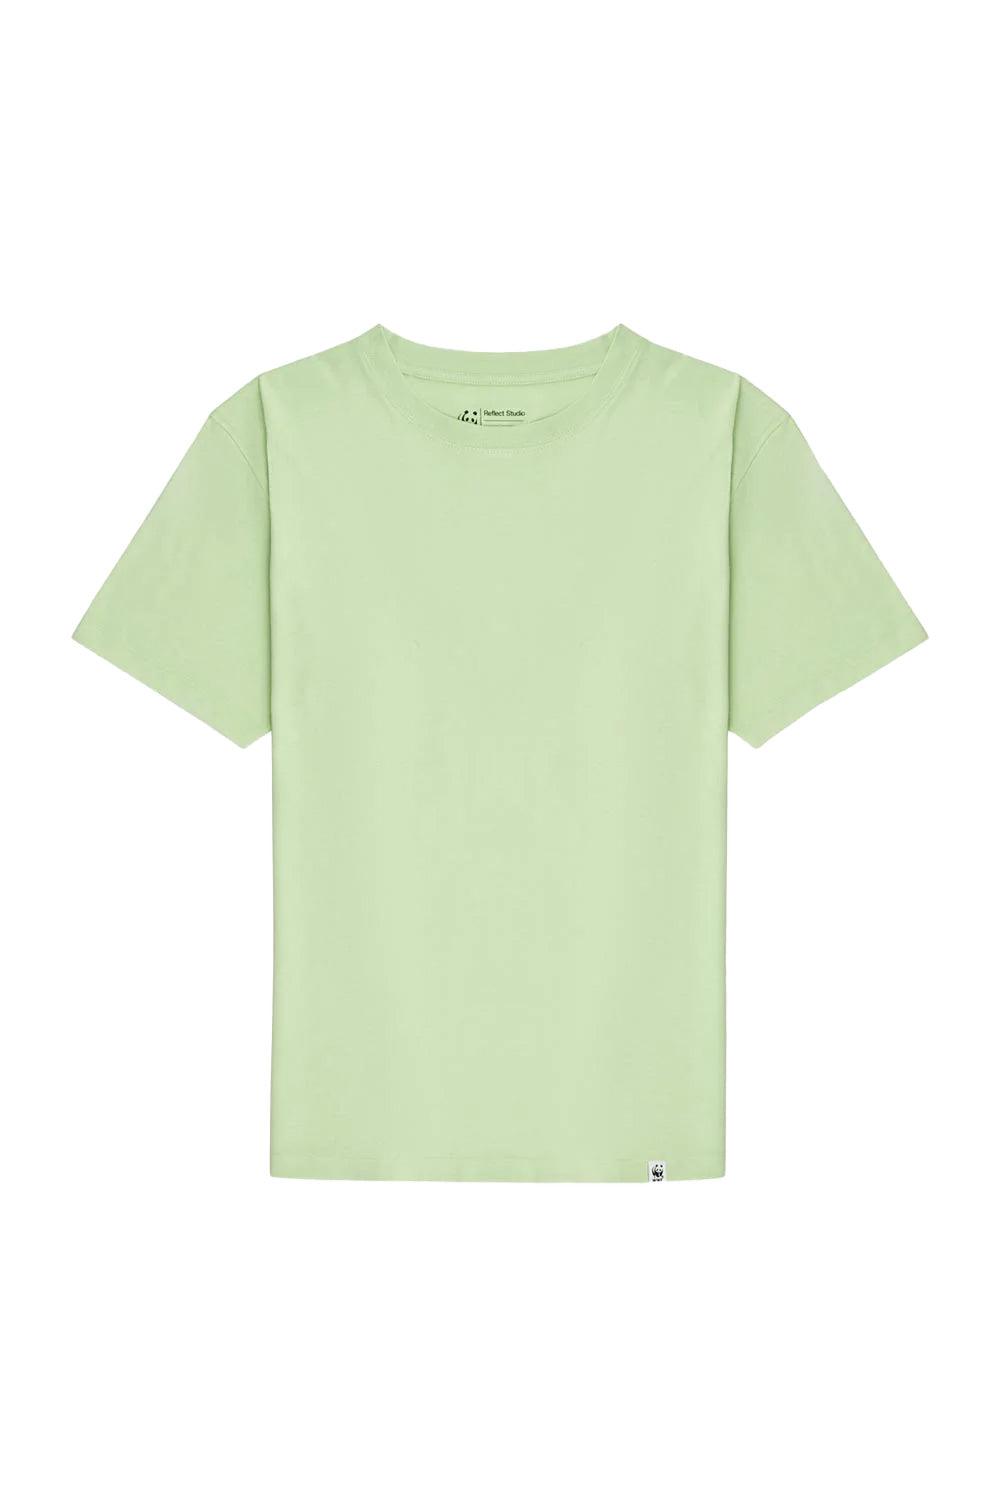 WWF MARKET | Common Ground T-Shirt - Fıstık Yeşili | Milagron